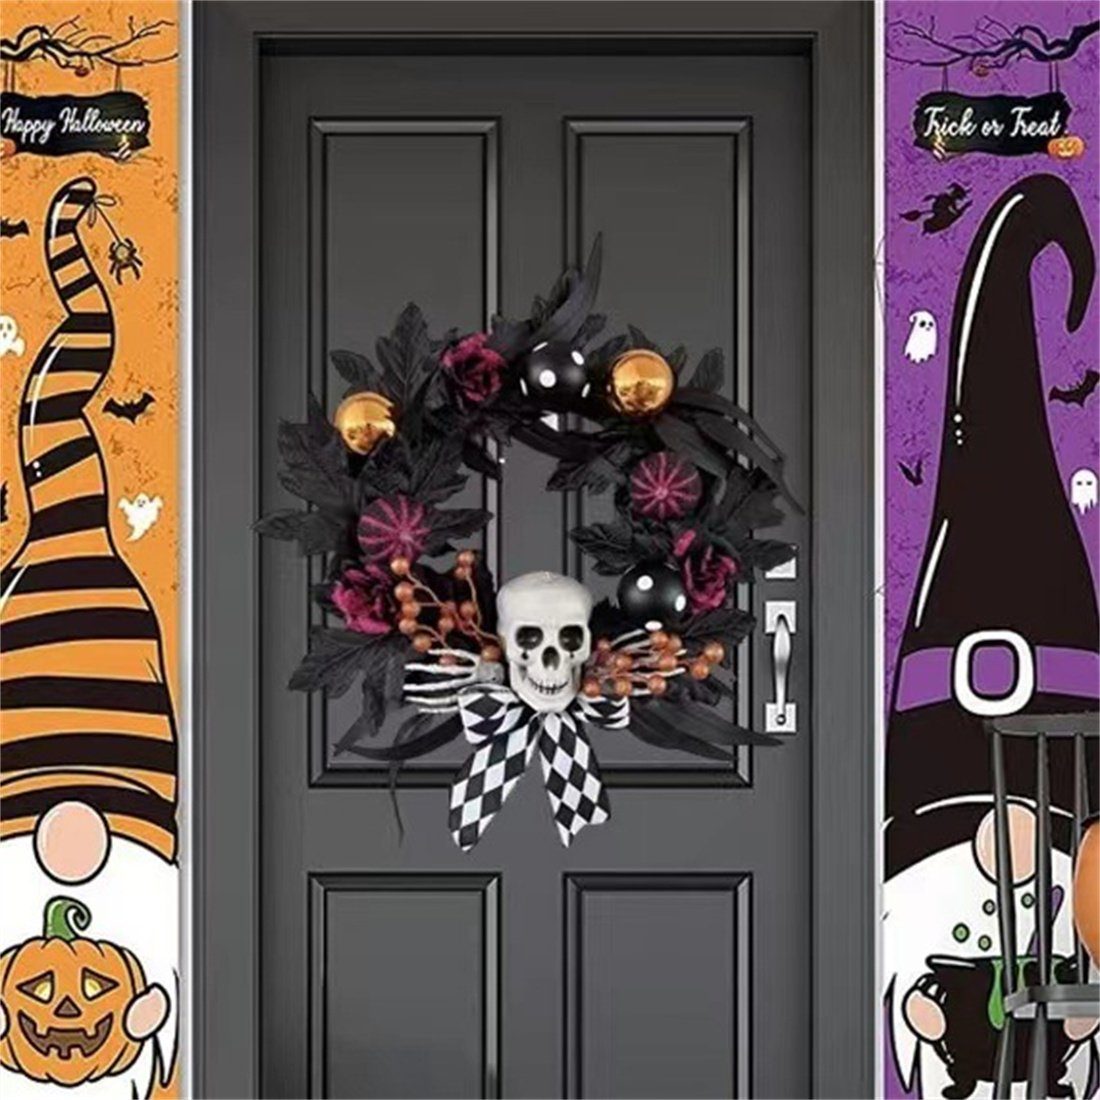 Gruselige Tür DÖRÖY Aufhängen, Party Halloween Dekoration Girlande, Kunstgirlande Totenkopf